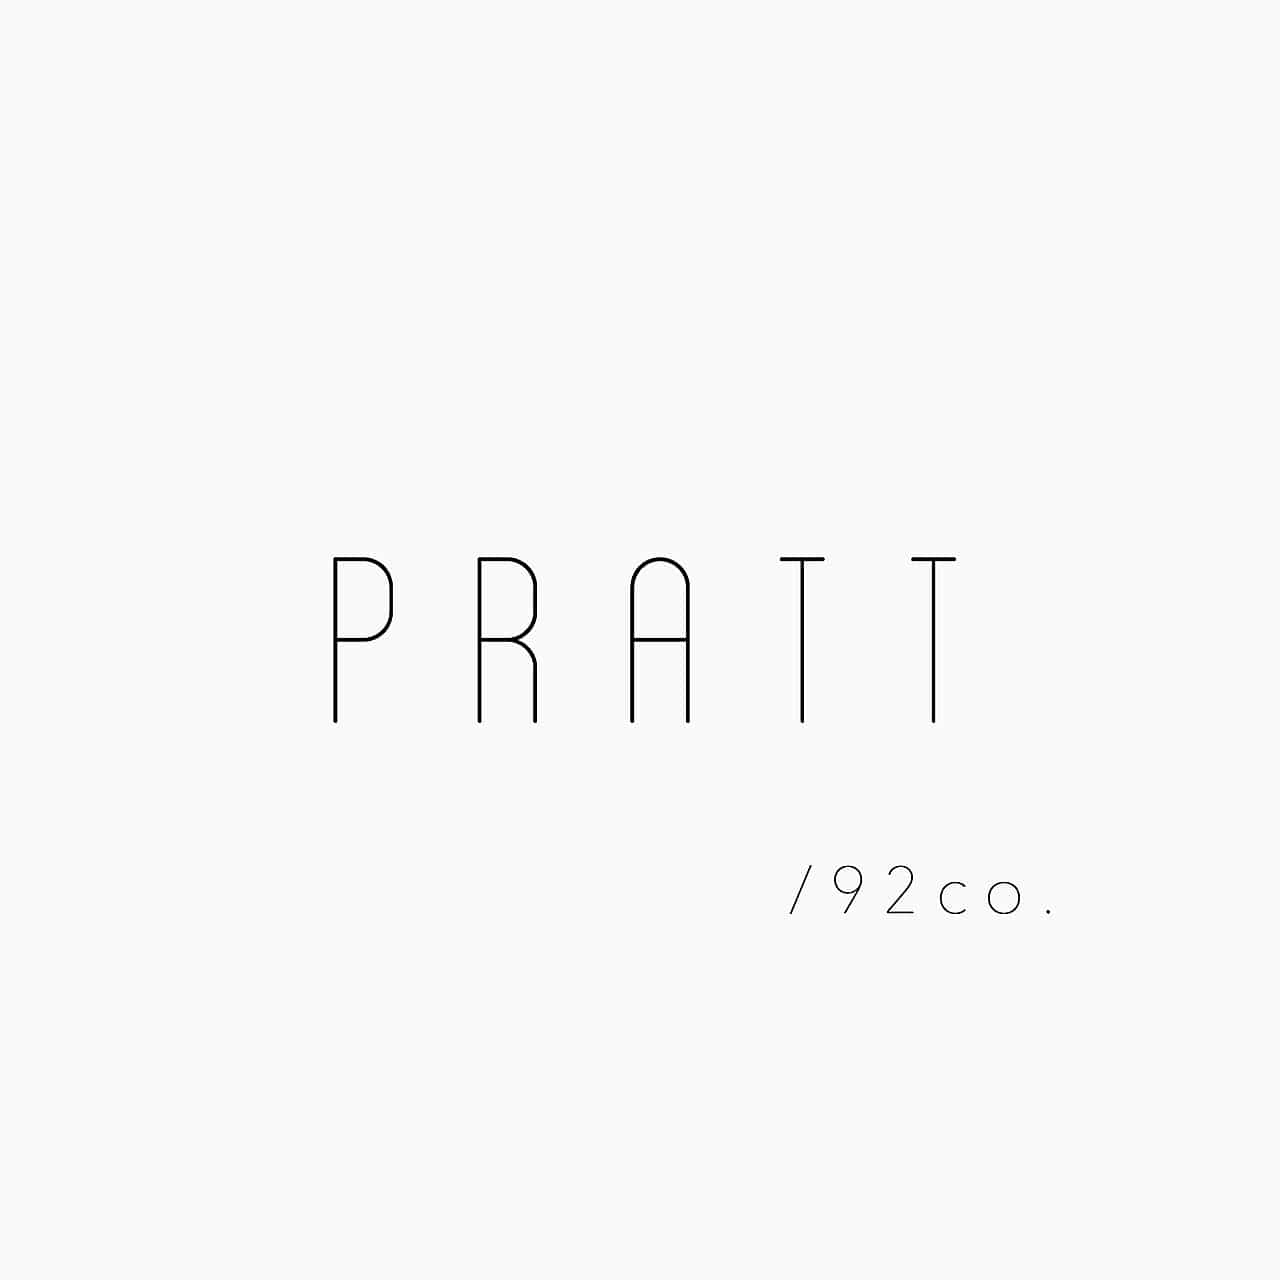 美容室PRATT / 92co.ロゴ画像